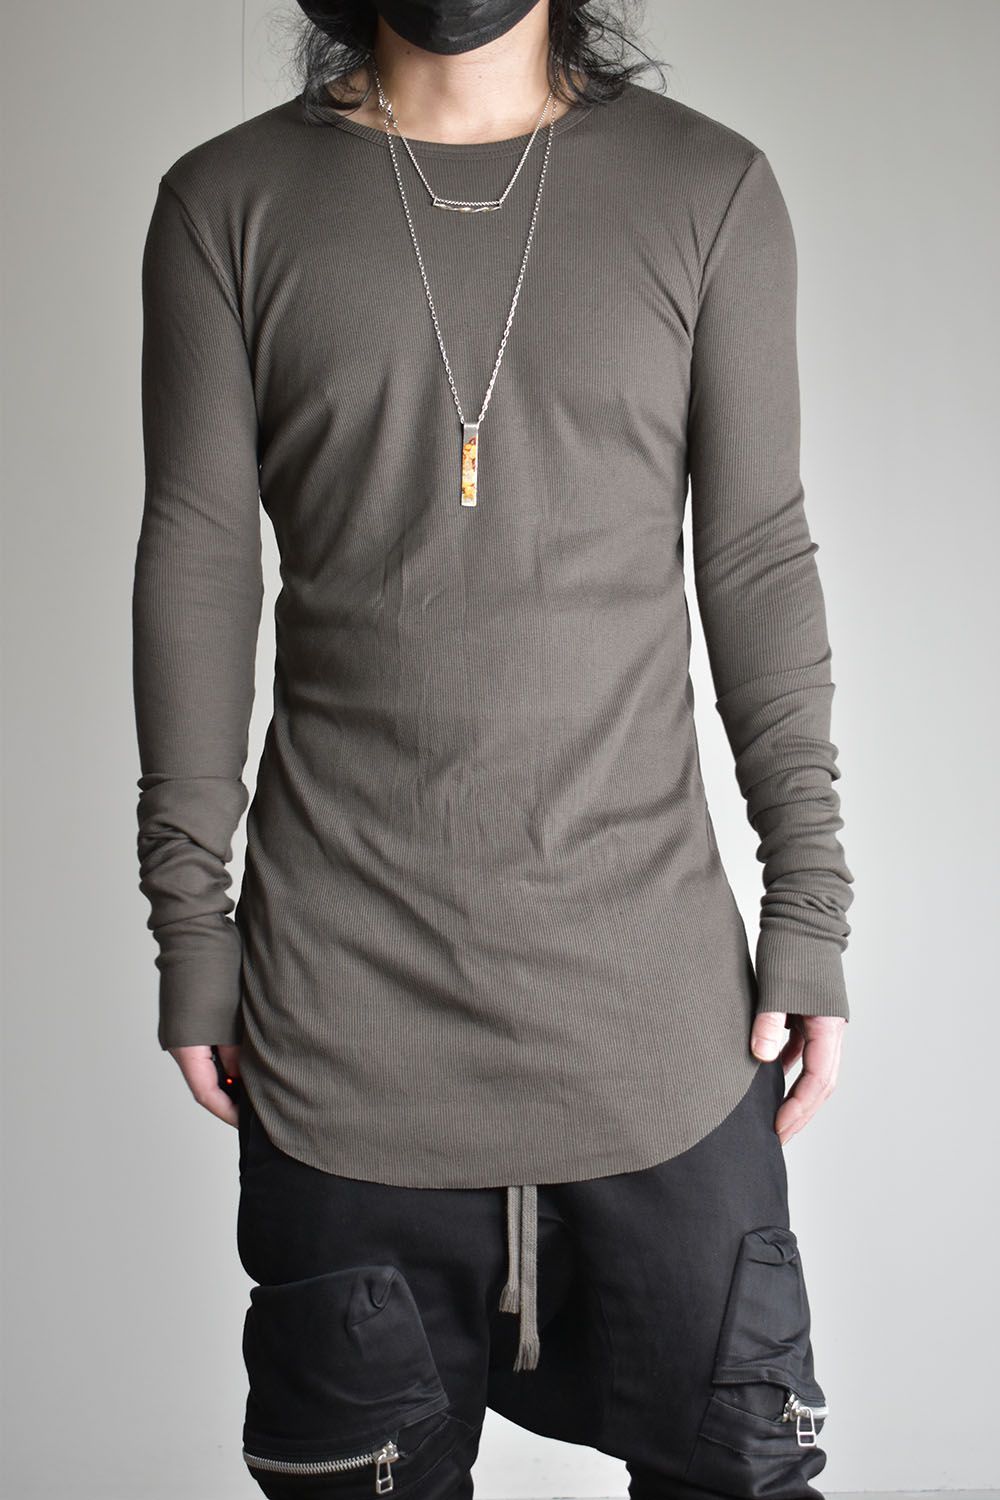 Modal & Cotton Rib Teleco Long Sleeve T Shirt "Dust"モダール×コットンリブテレコロングスリーブTシャツ"ダスト"